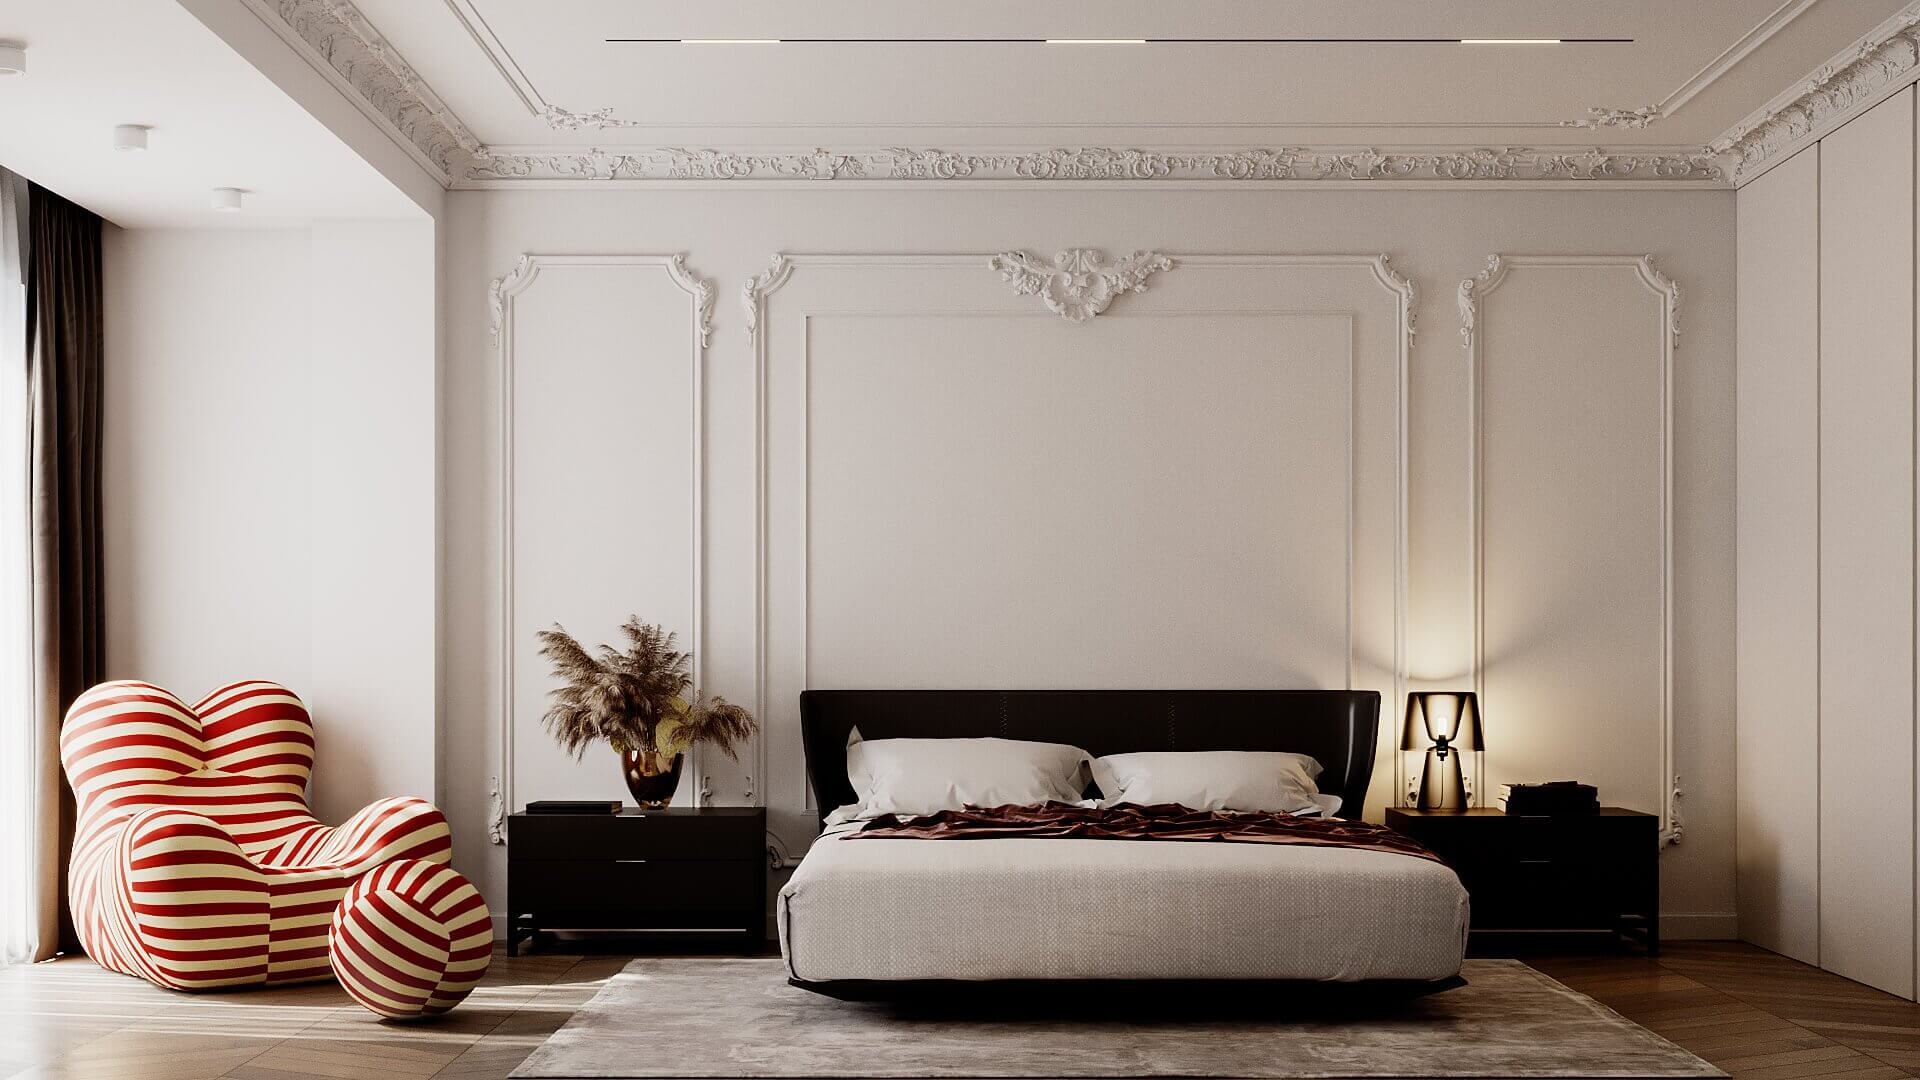 Bernardazzi Apartment bedroom design - cgi visualization